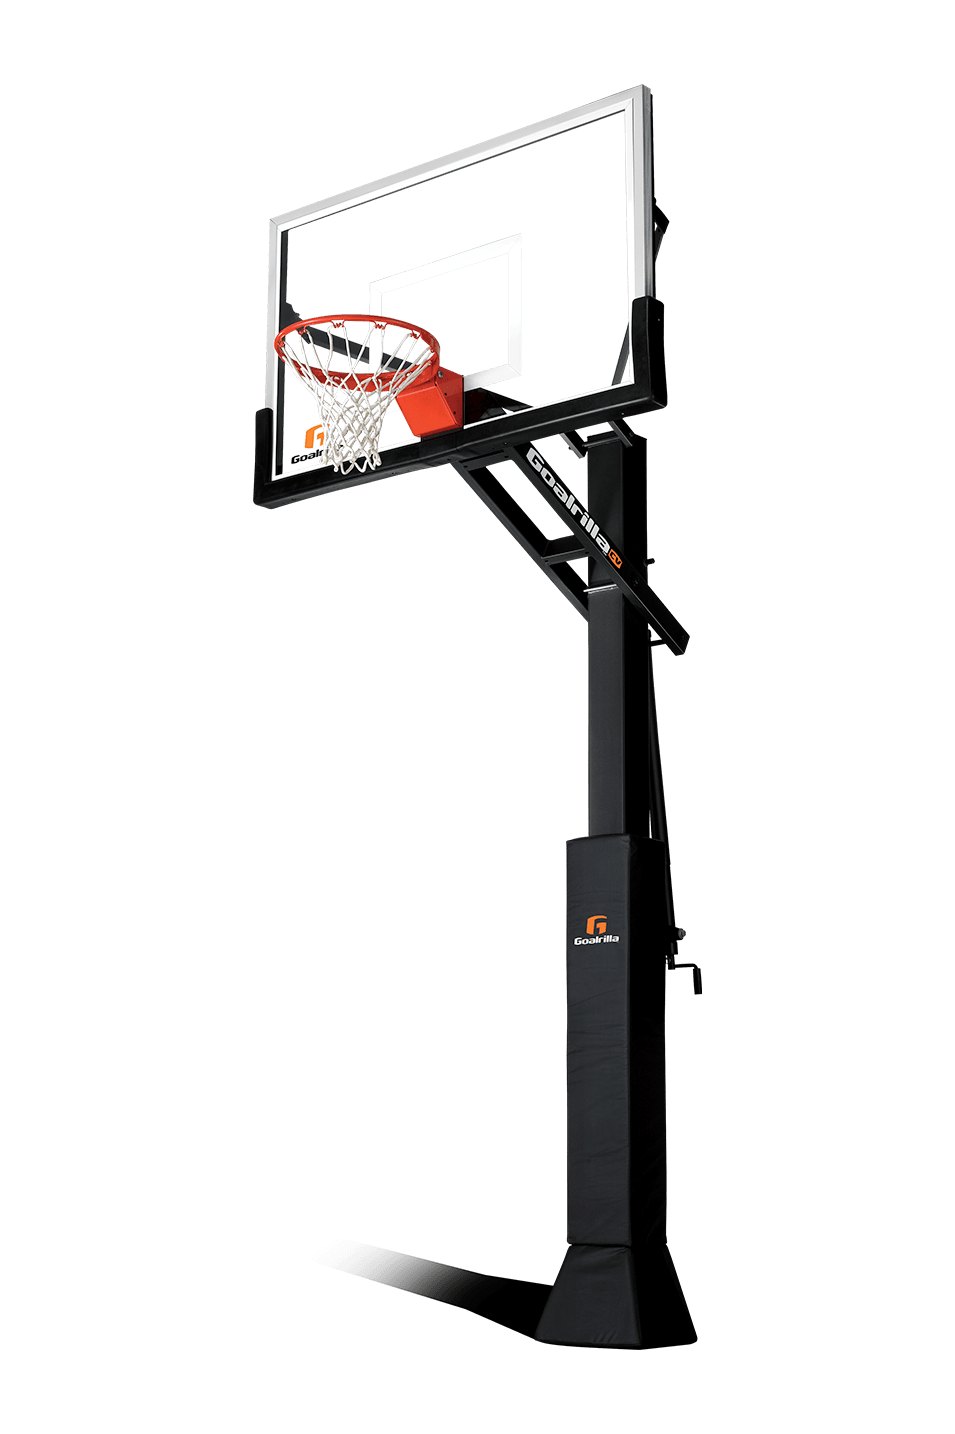 CV60 – Goalrilla Basketball Hoop *Limited Stock*